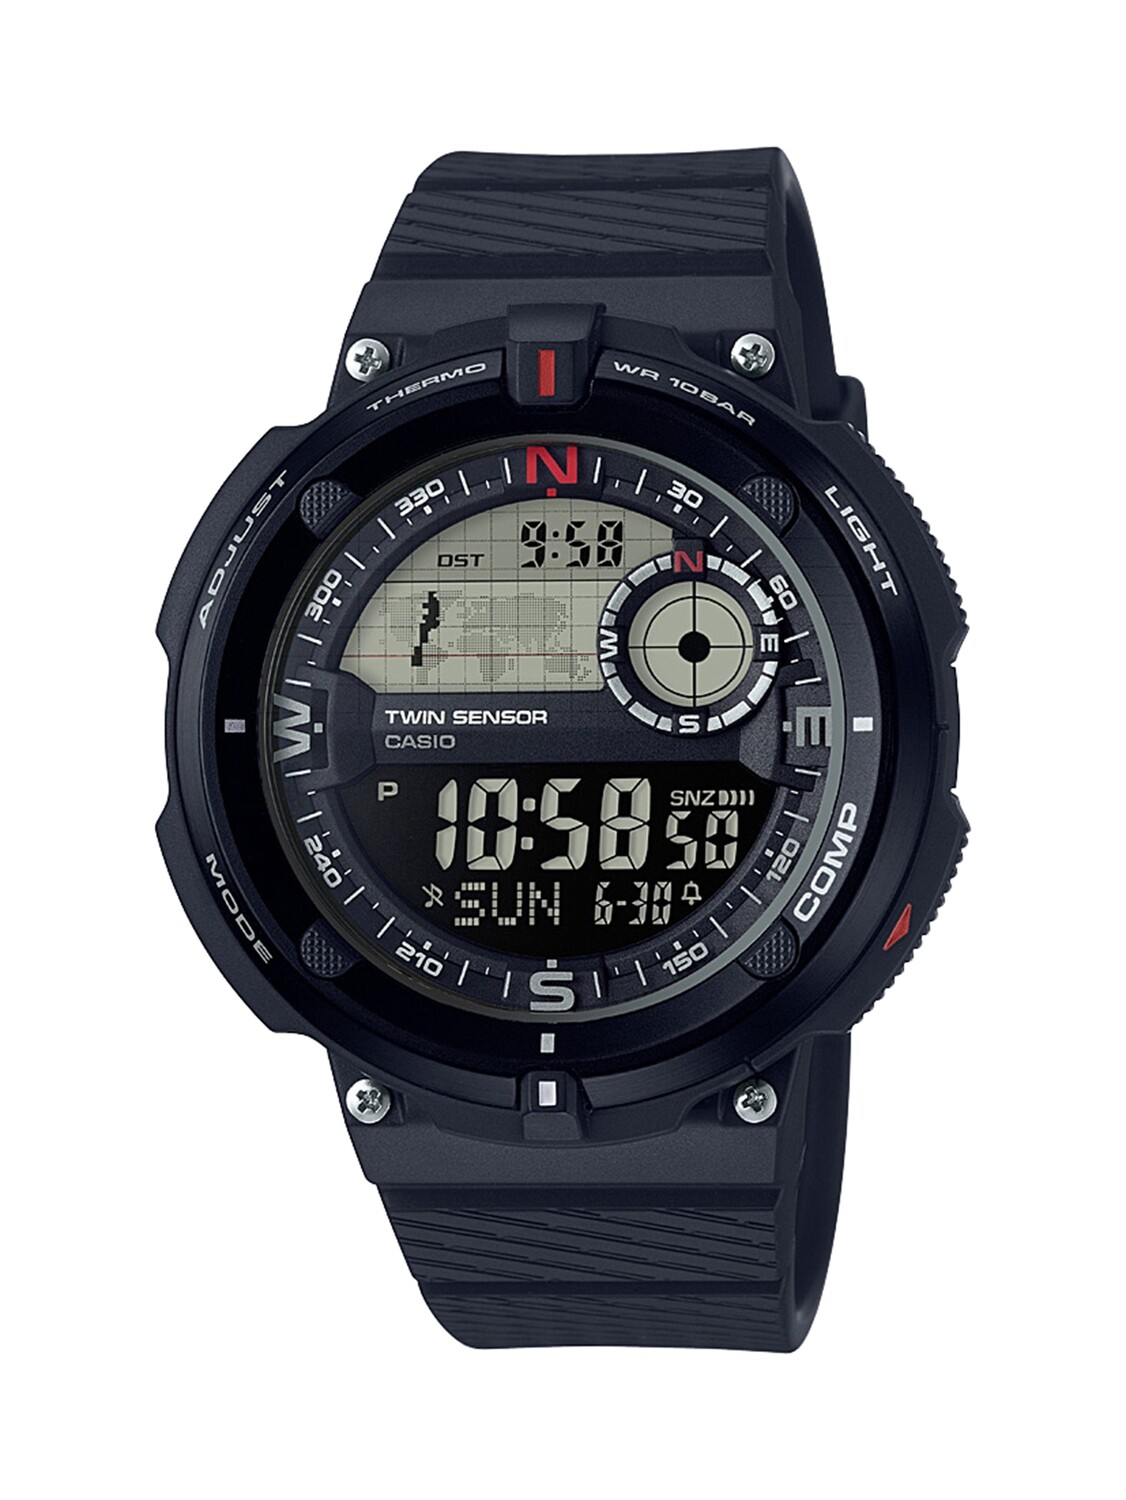 Casio Men's 'Twin Sensor' Quartz Resin Casual Watch, Color Black (Model: SGW-600H-1BCF)